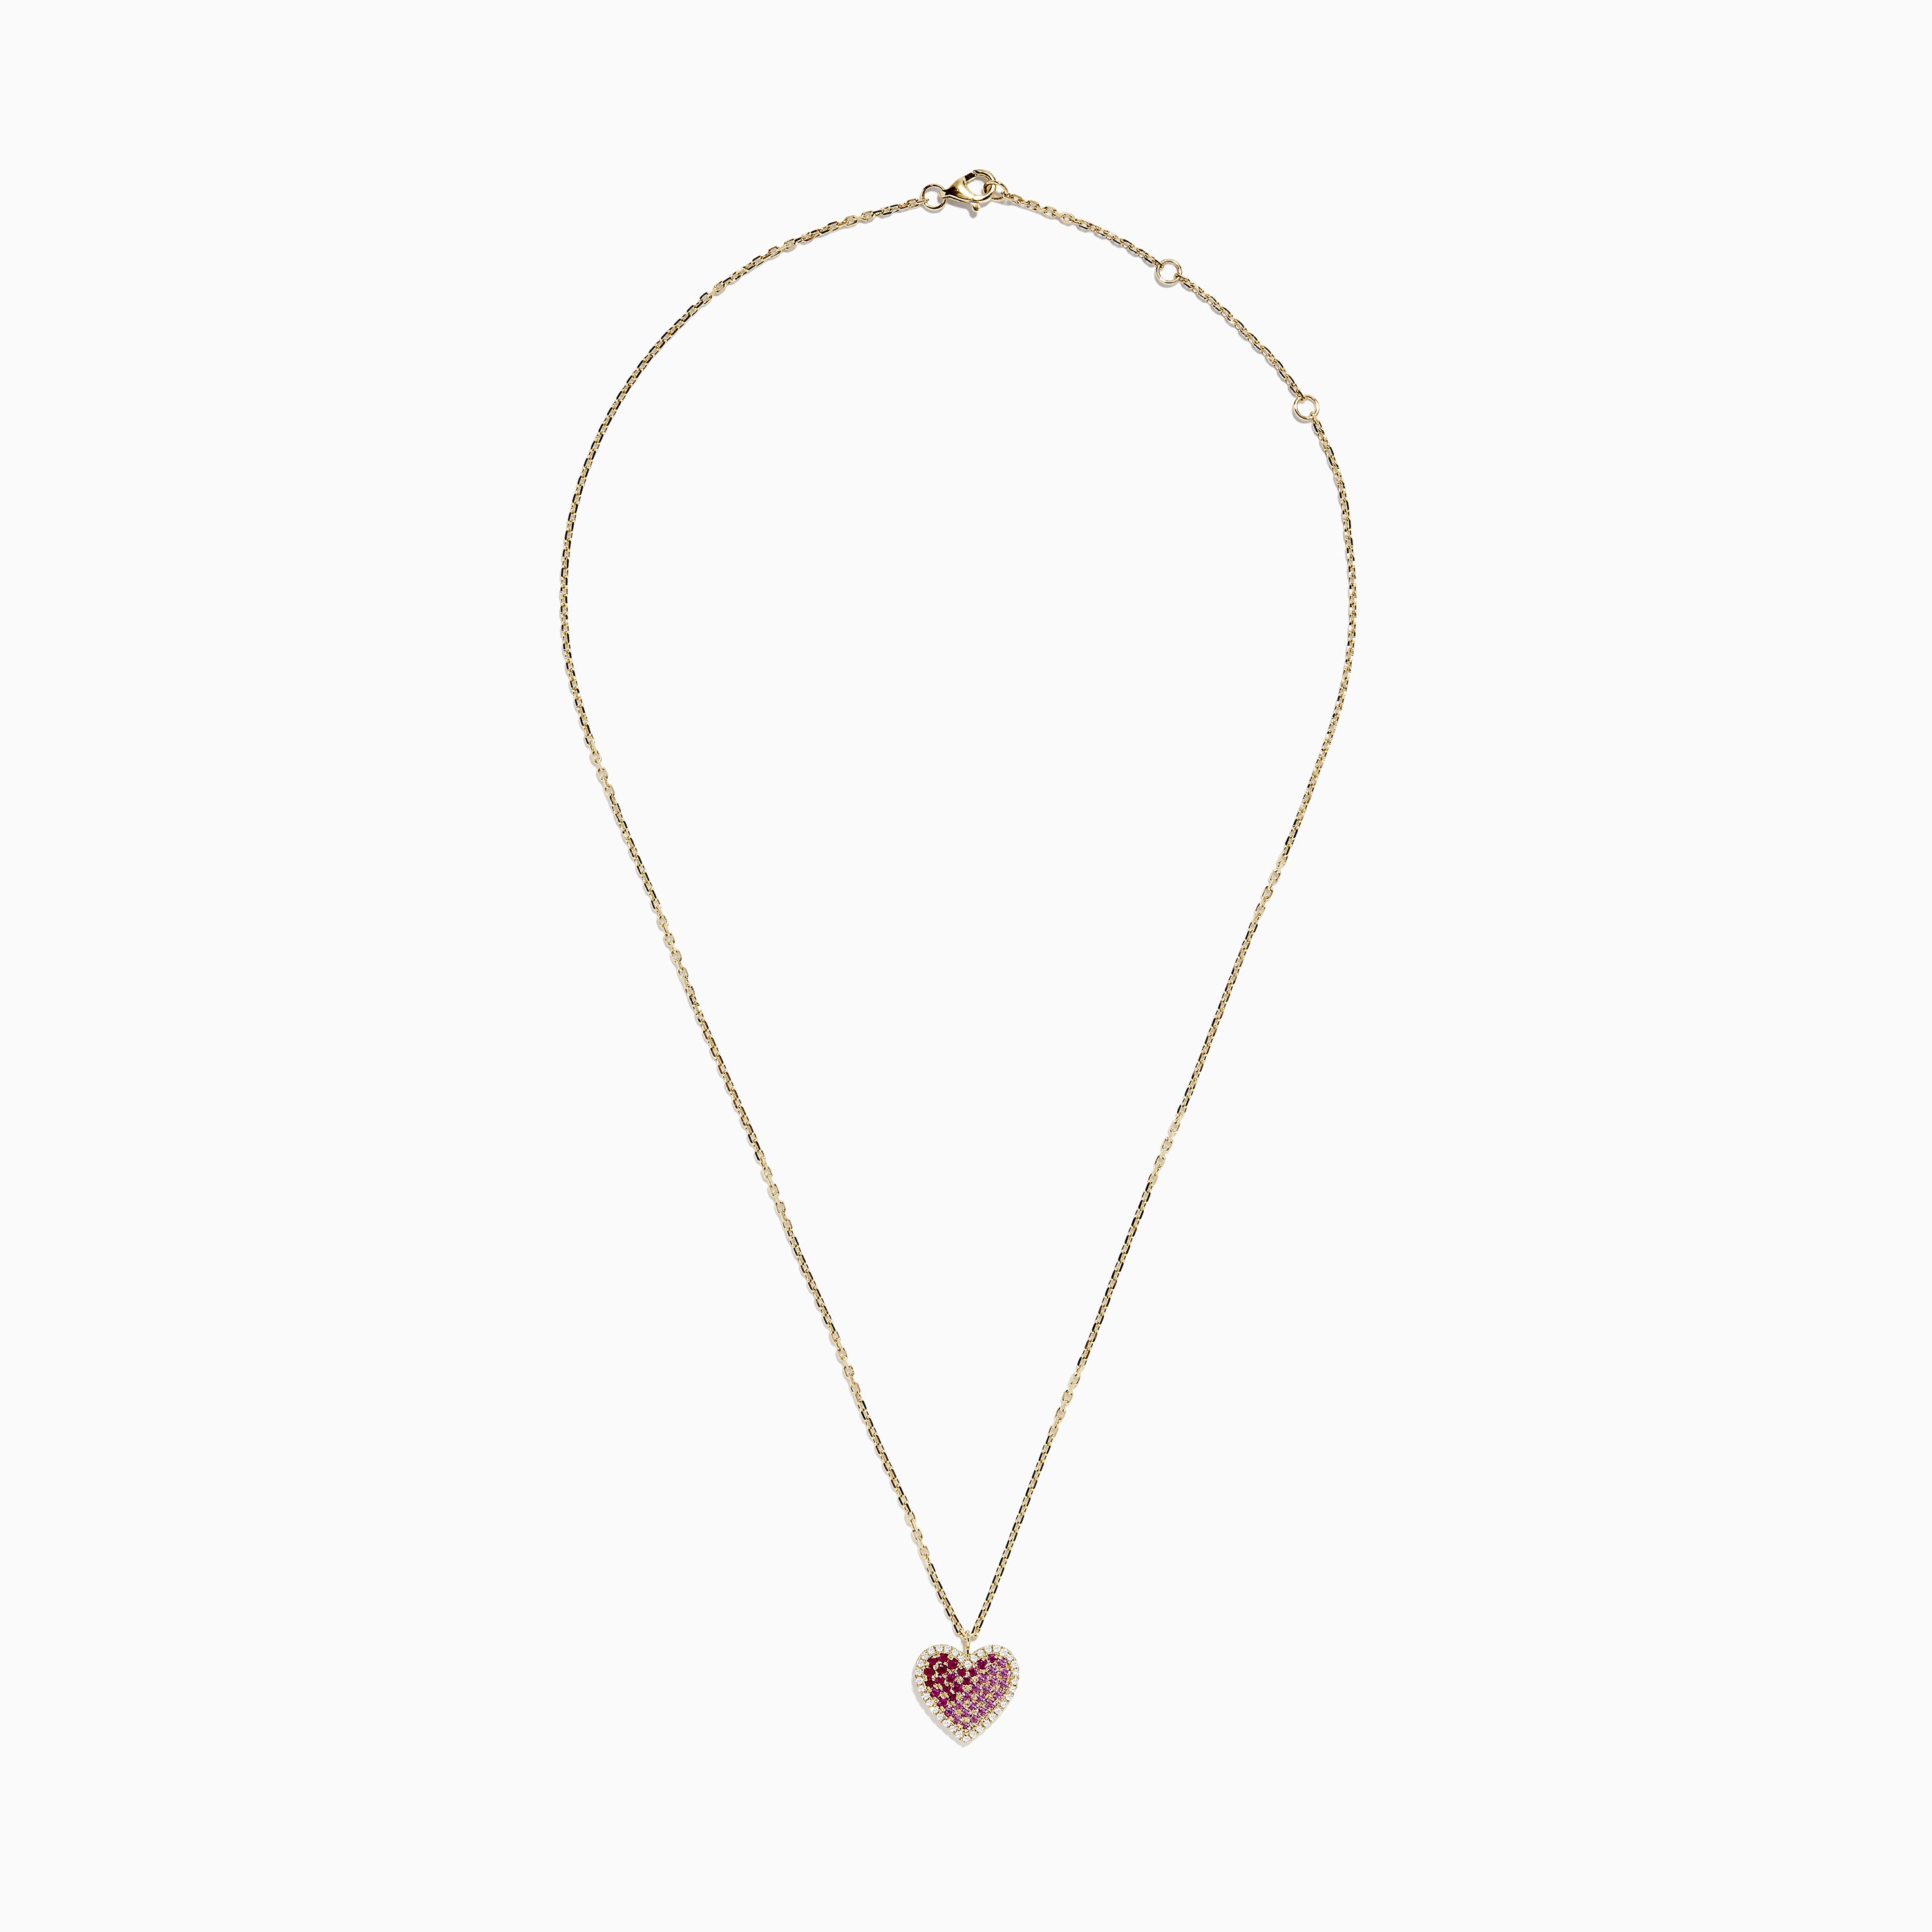 Effy 14K Yellow Gold Pink Sapphire, Ruby and Diamond Heart Pendant